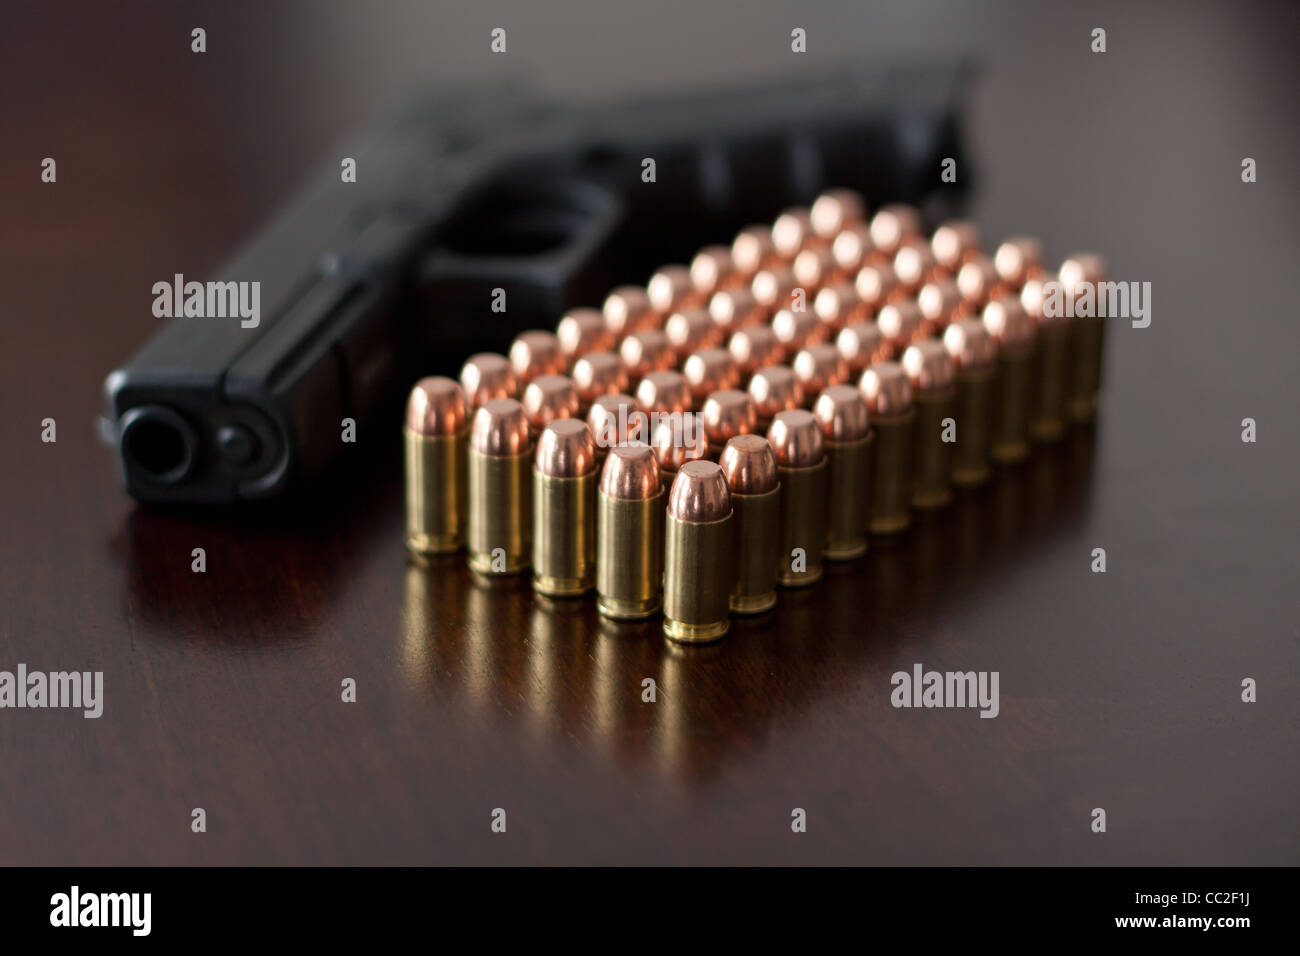 Glock 22 – 40 Caliber handgun with ammunition on a wooden surface Stock Photo